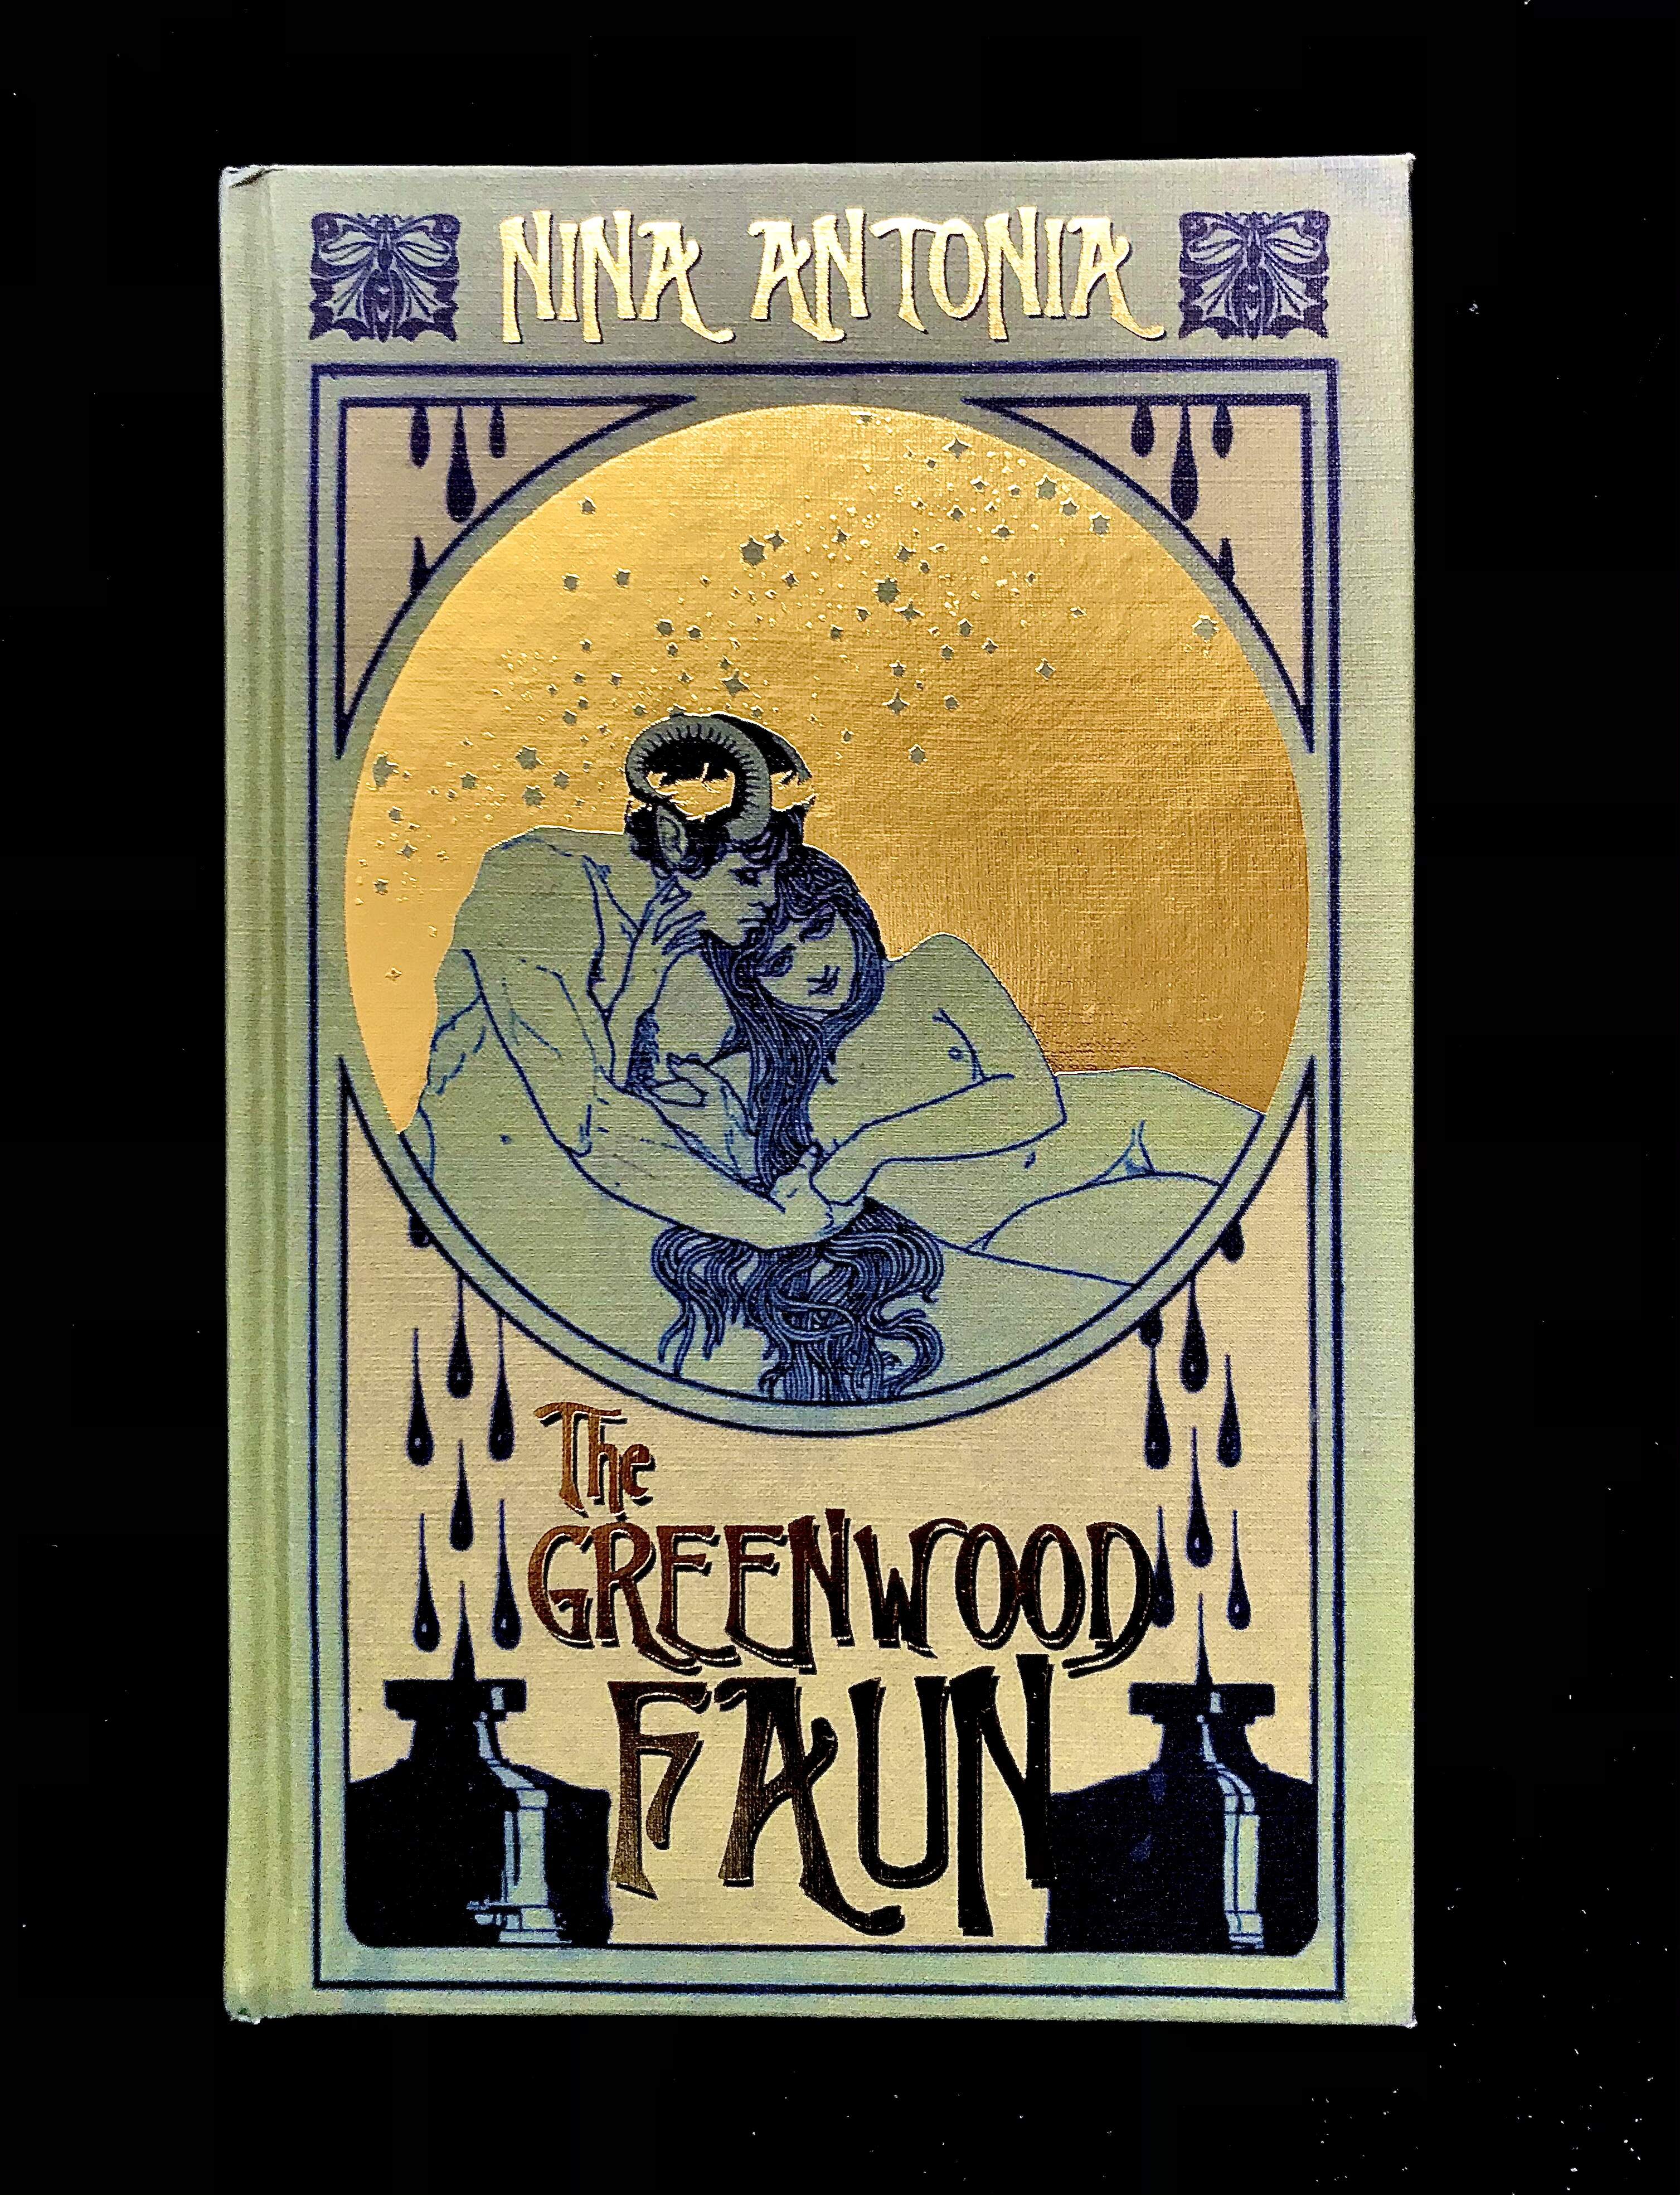 The Green Wood Faun by Nina Antonia